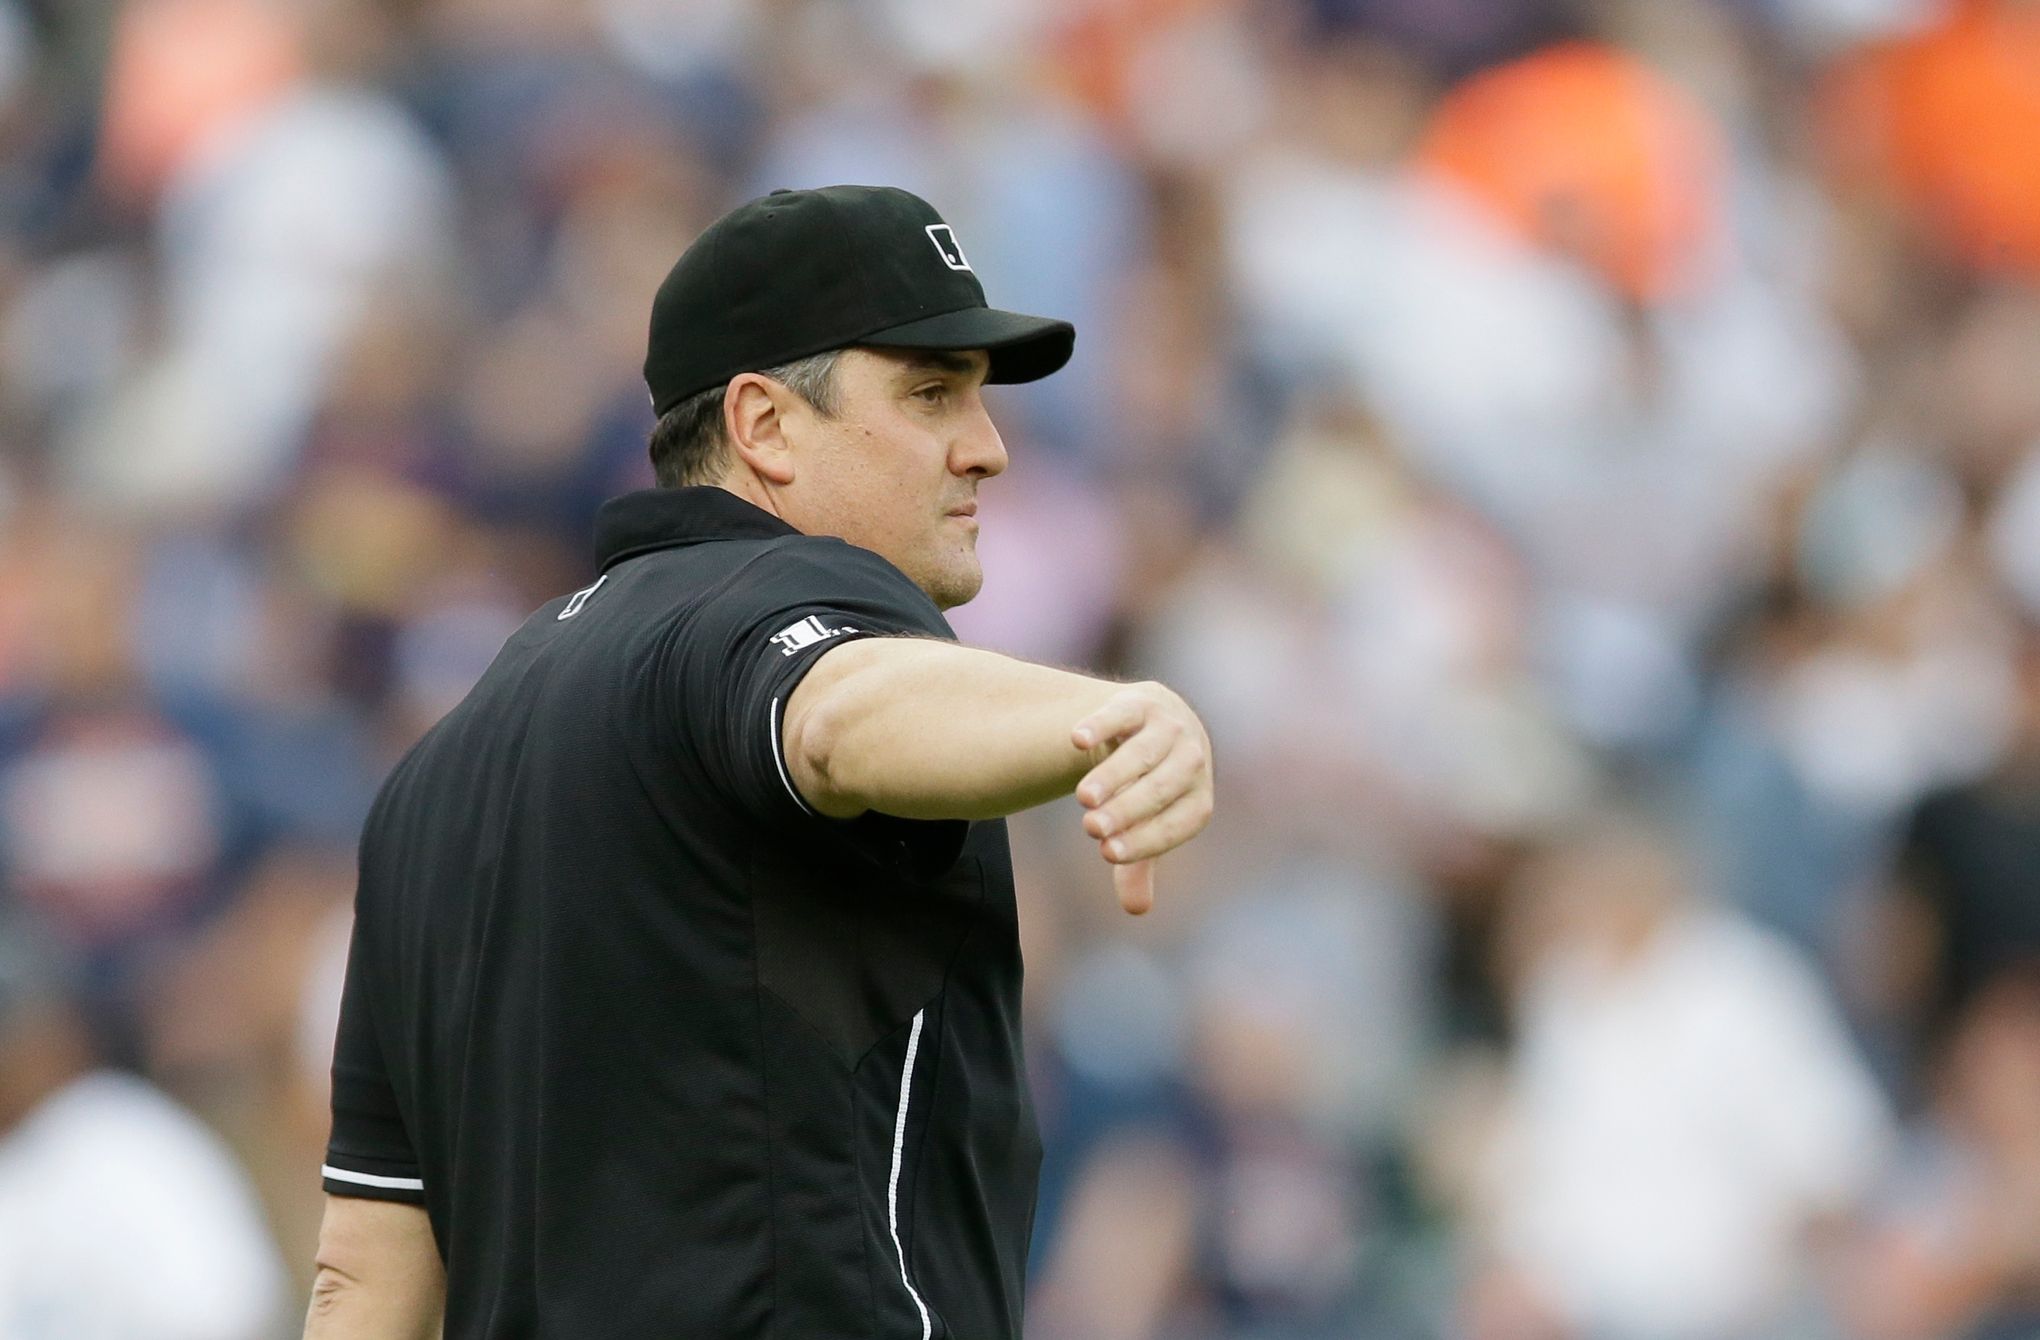 Ten MLB Umpires Retiring, Most Since 1999